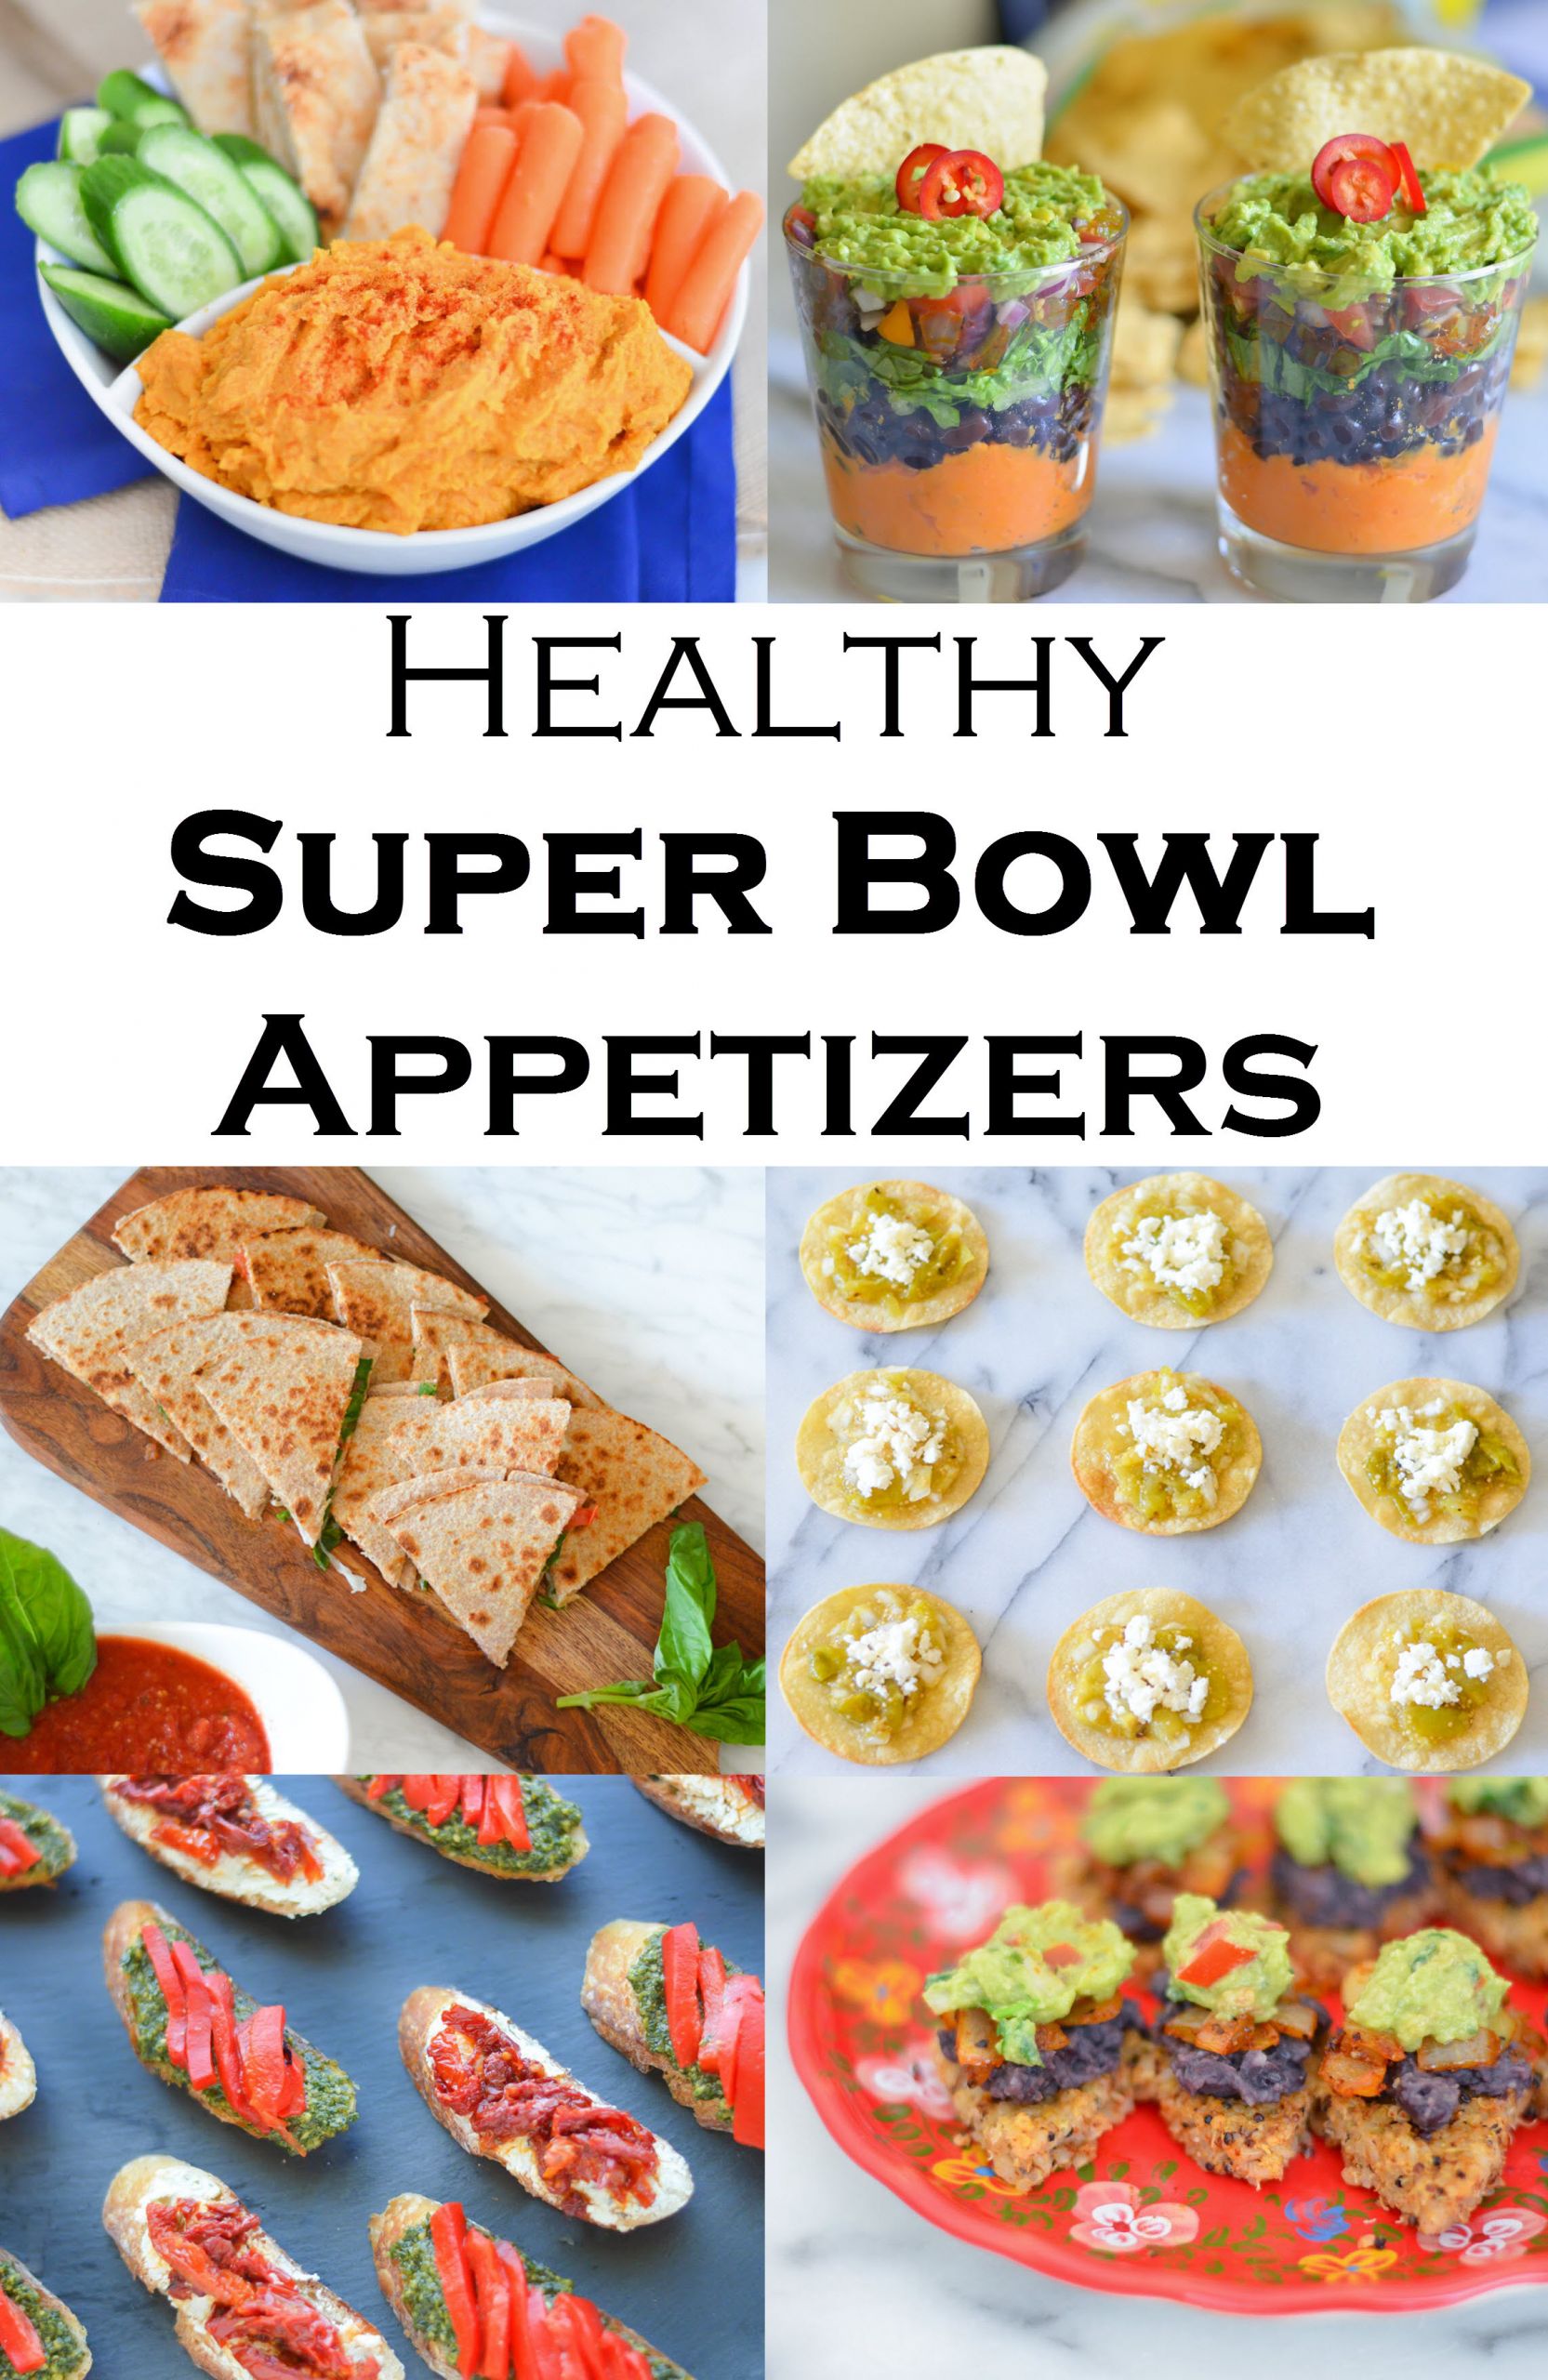 Super Bowl Appetizer Recipes
 Healthy Super Bowl Recipes For Everyone